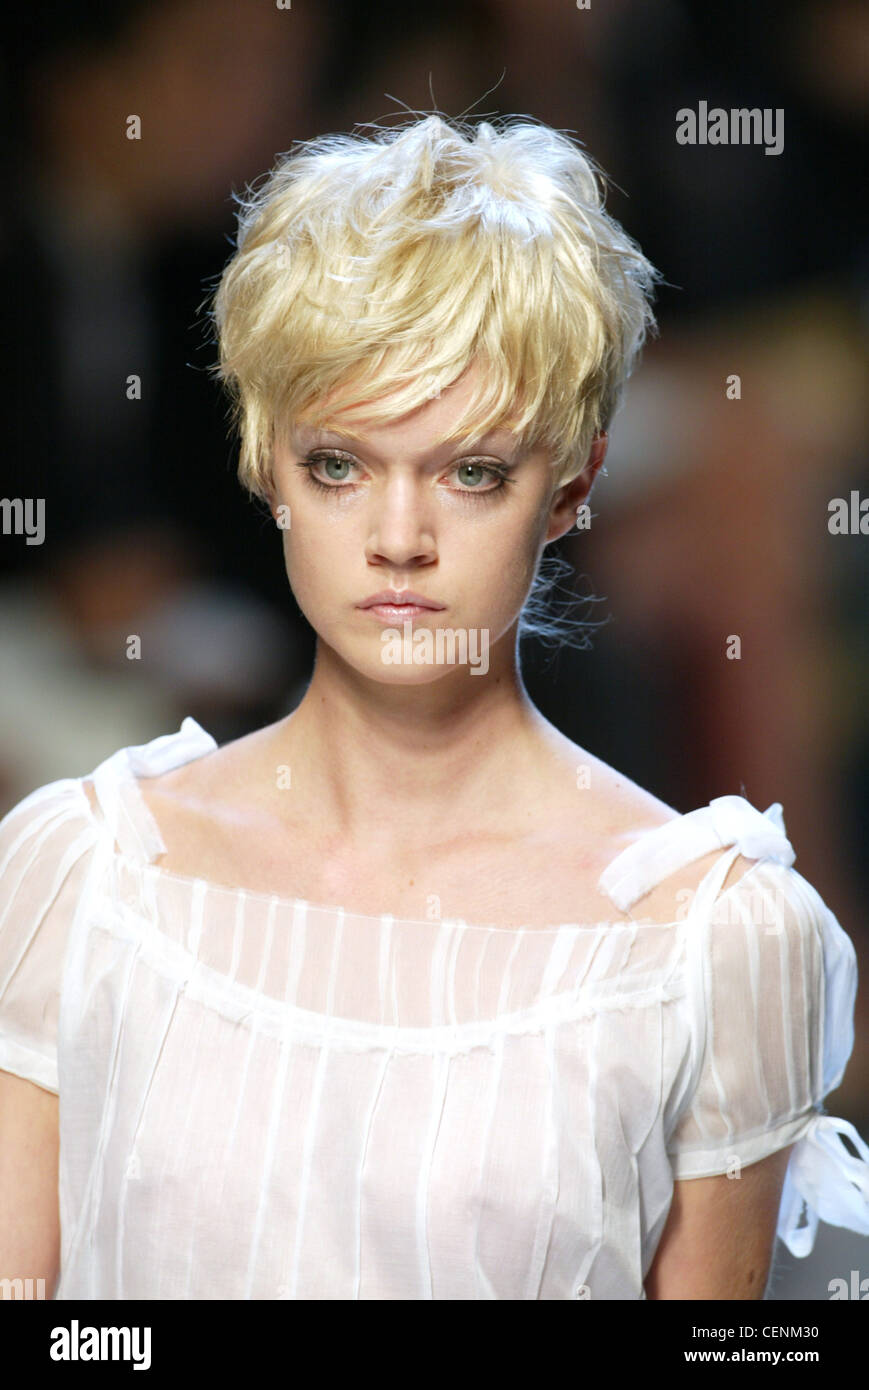 Philosophie Mailand bereit zu tragen S S Sixties Style: Blonde Modell mit Fransen Kurzhaarschnitt Haare zerzaust Stockfoto